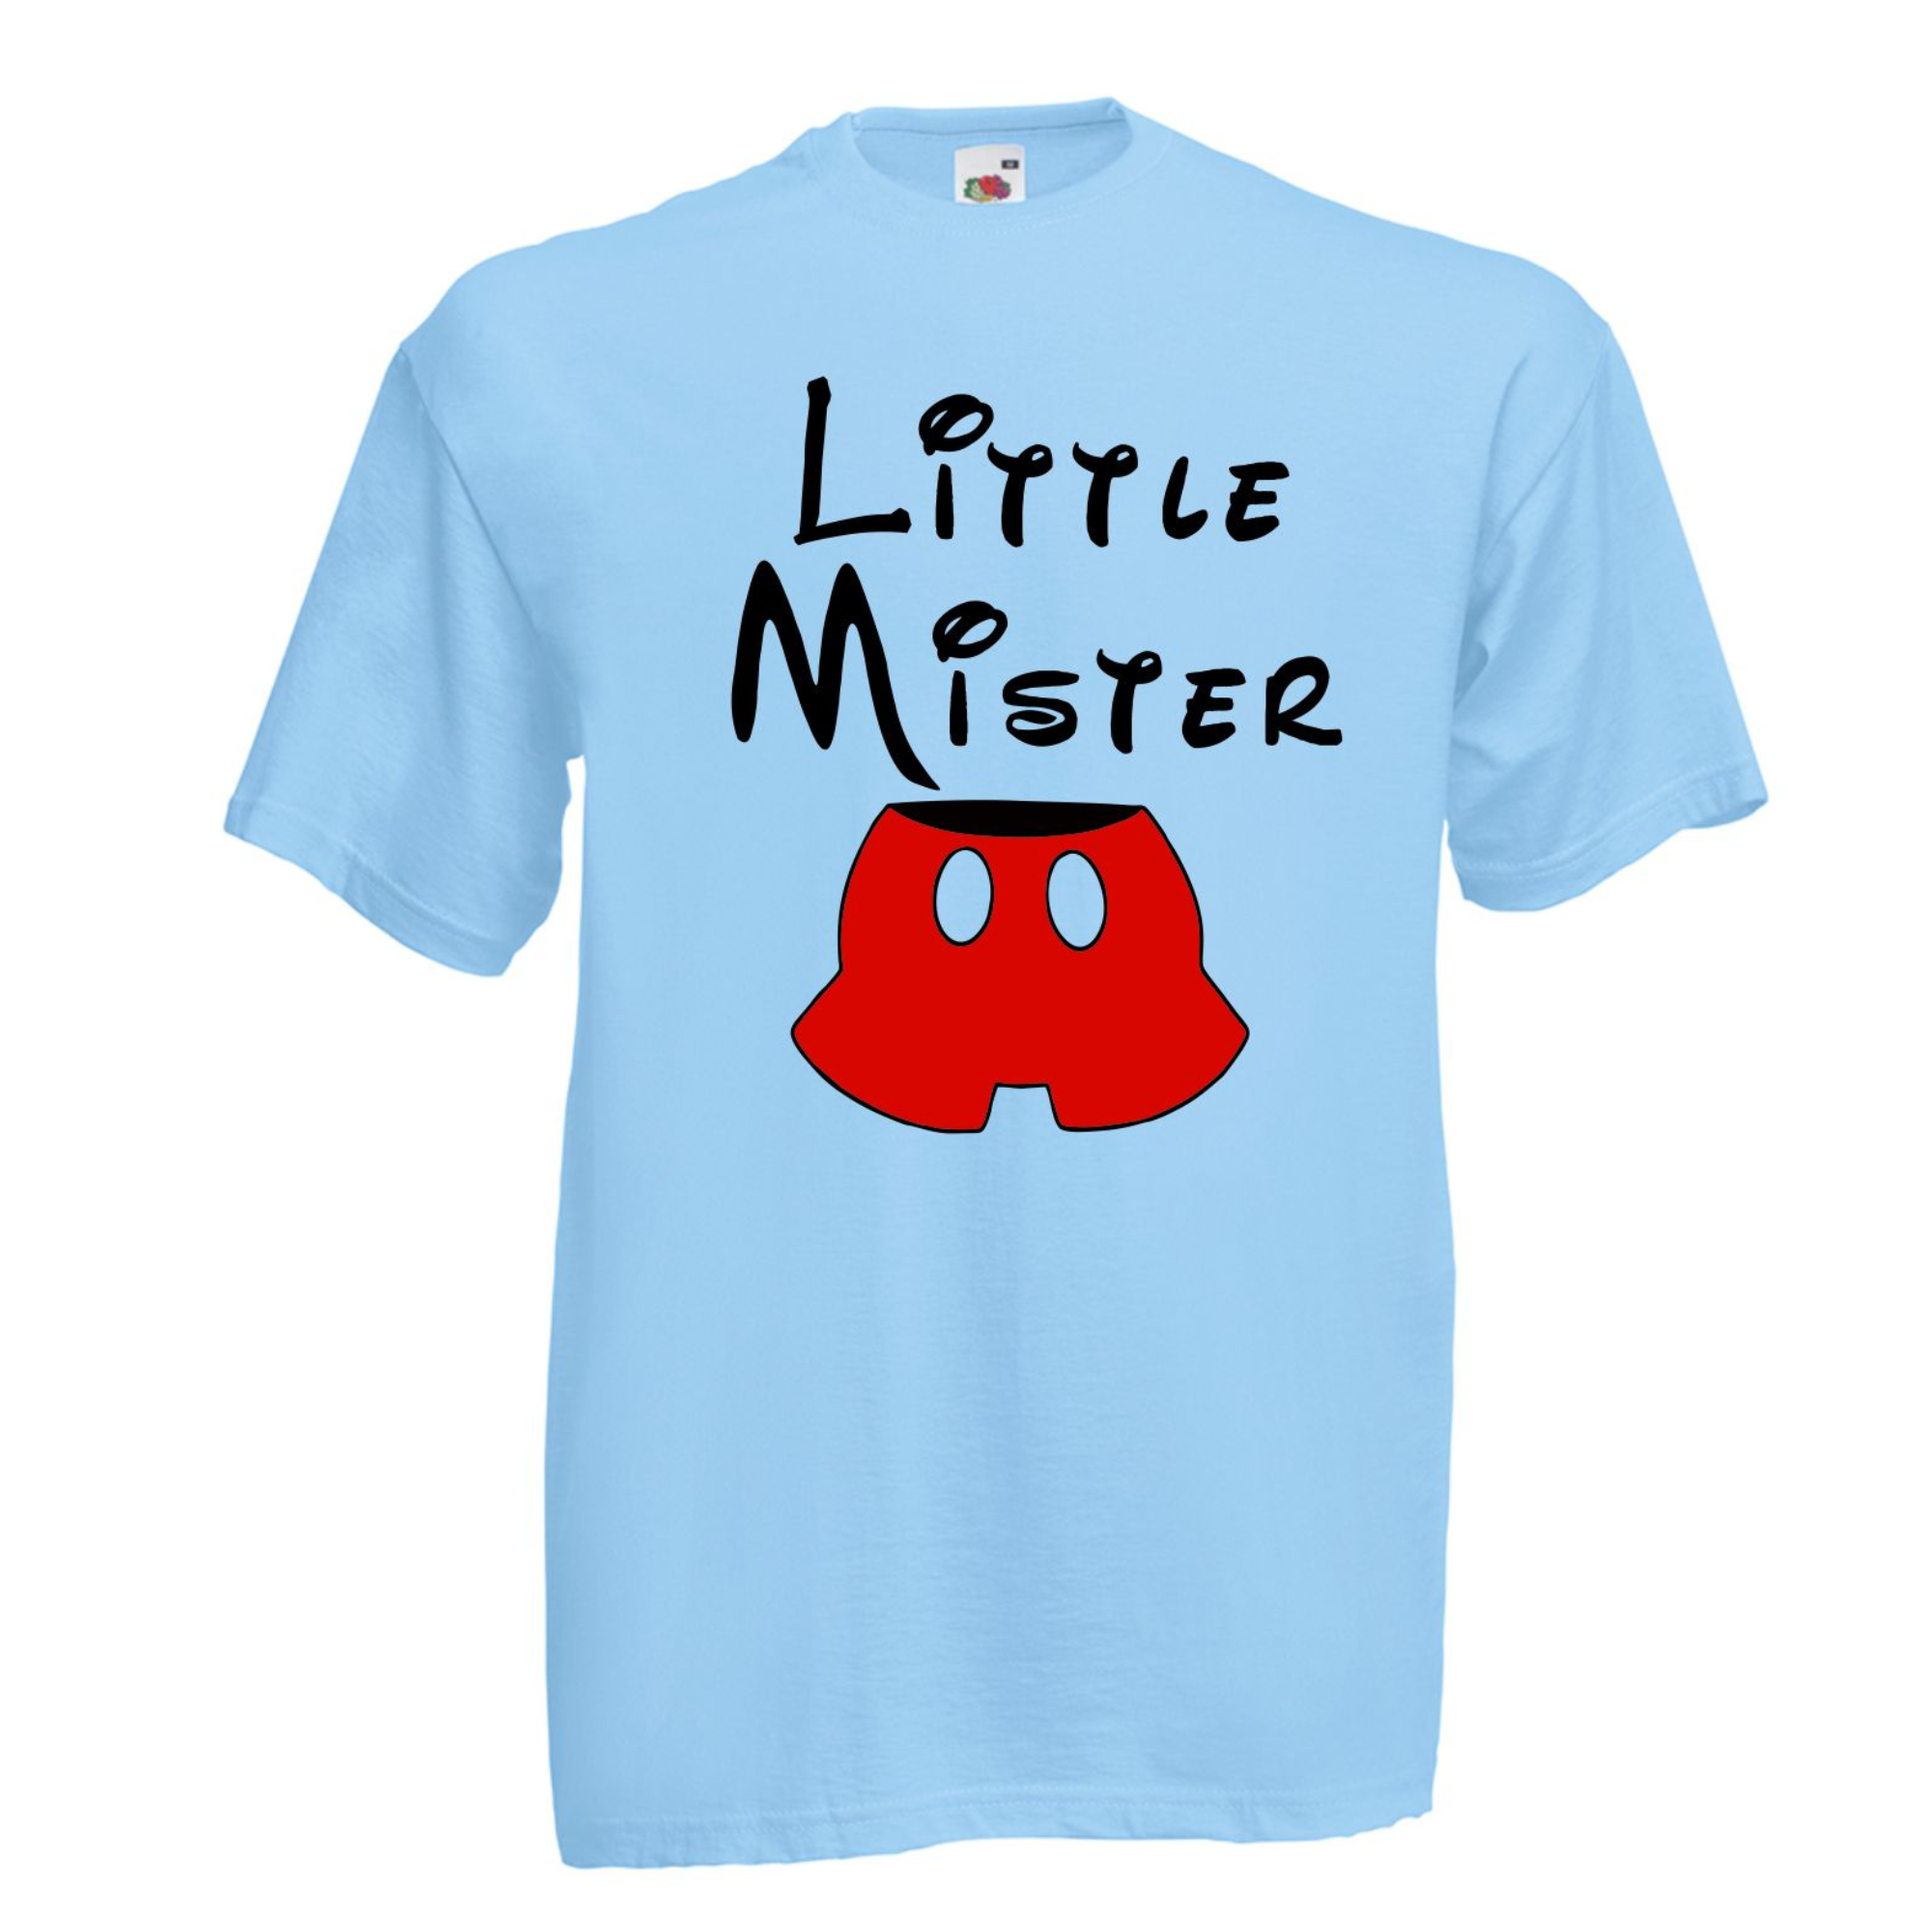 Little Mister (Disney) T-shirt - Personalised Gift